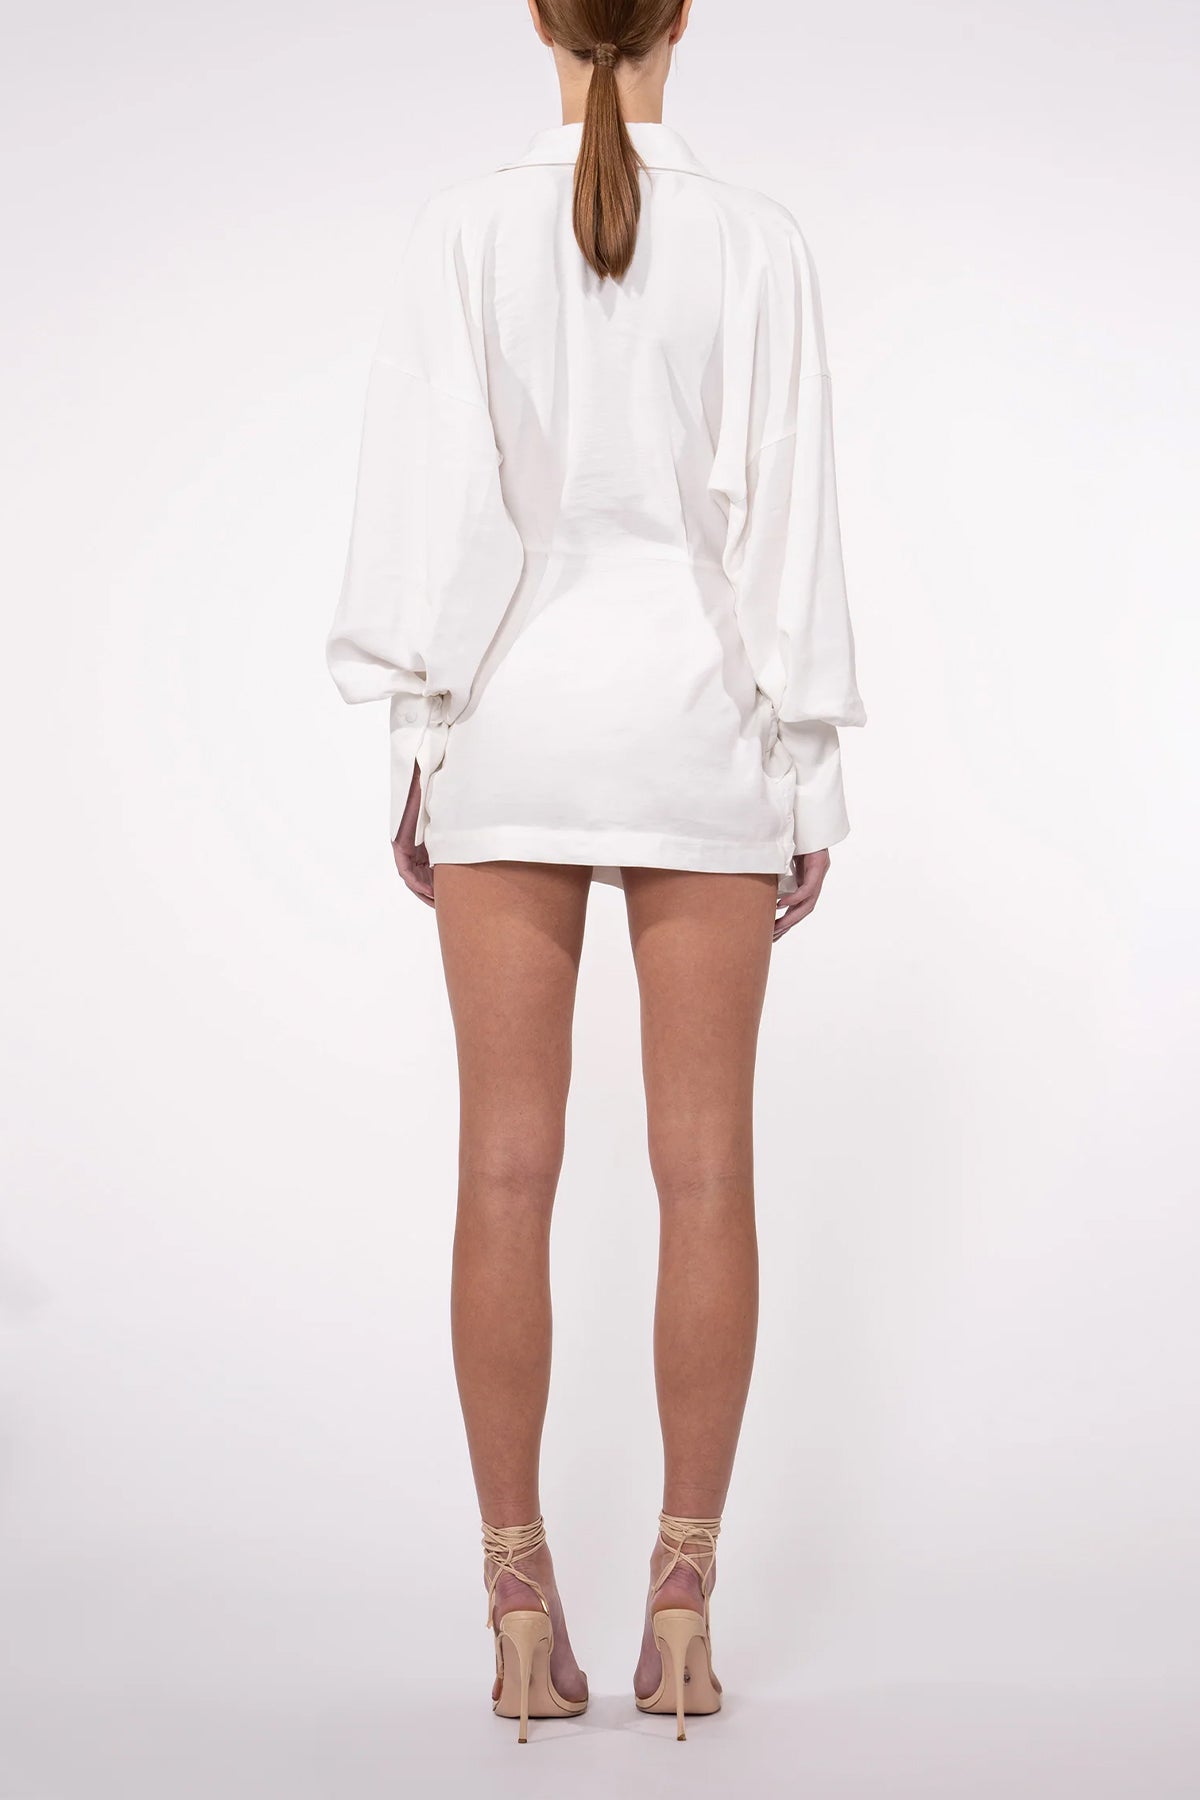 Heidi Mini Dress in White - shop-olivia.com